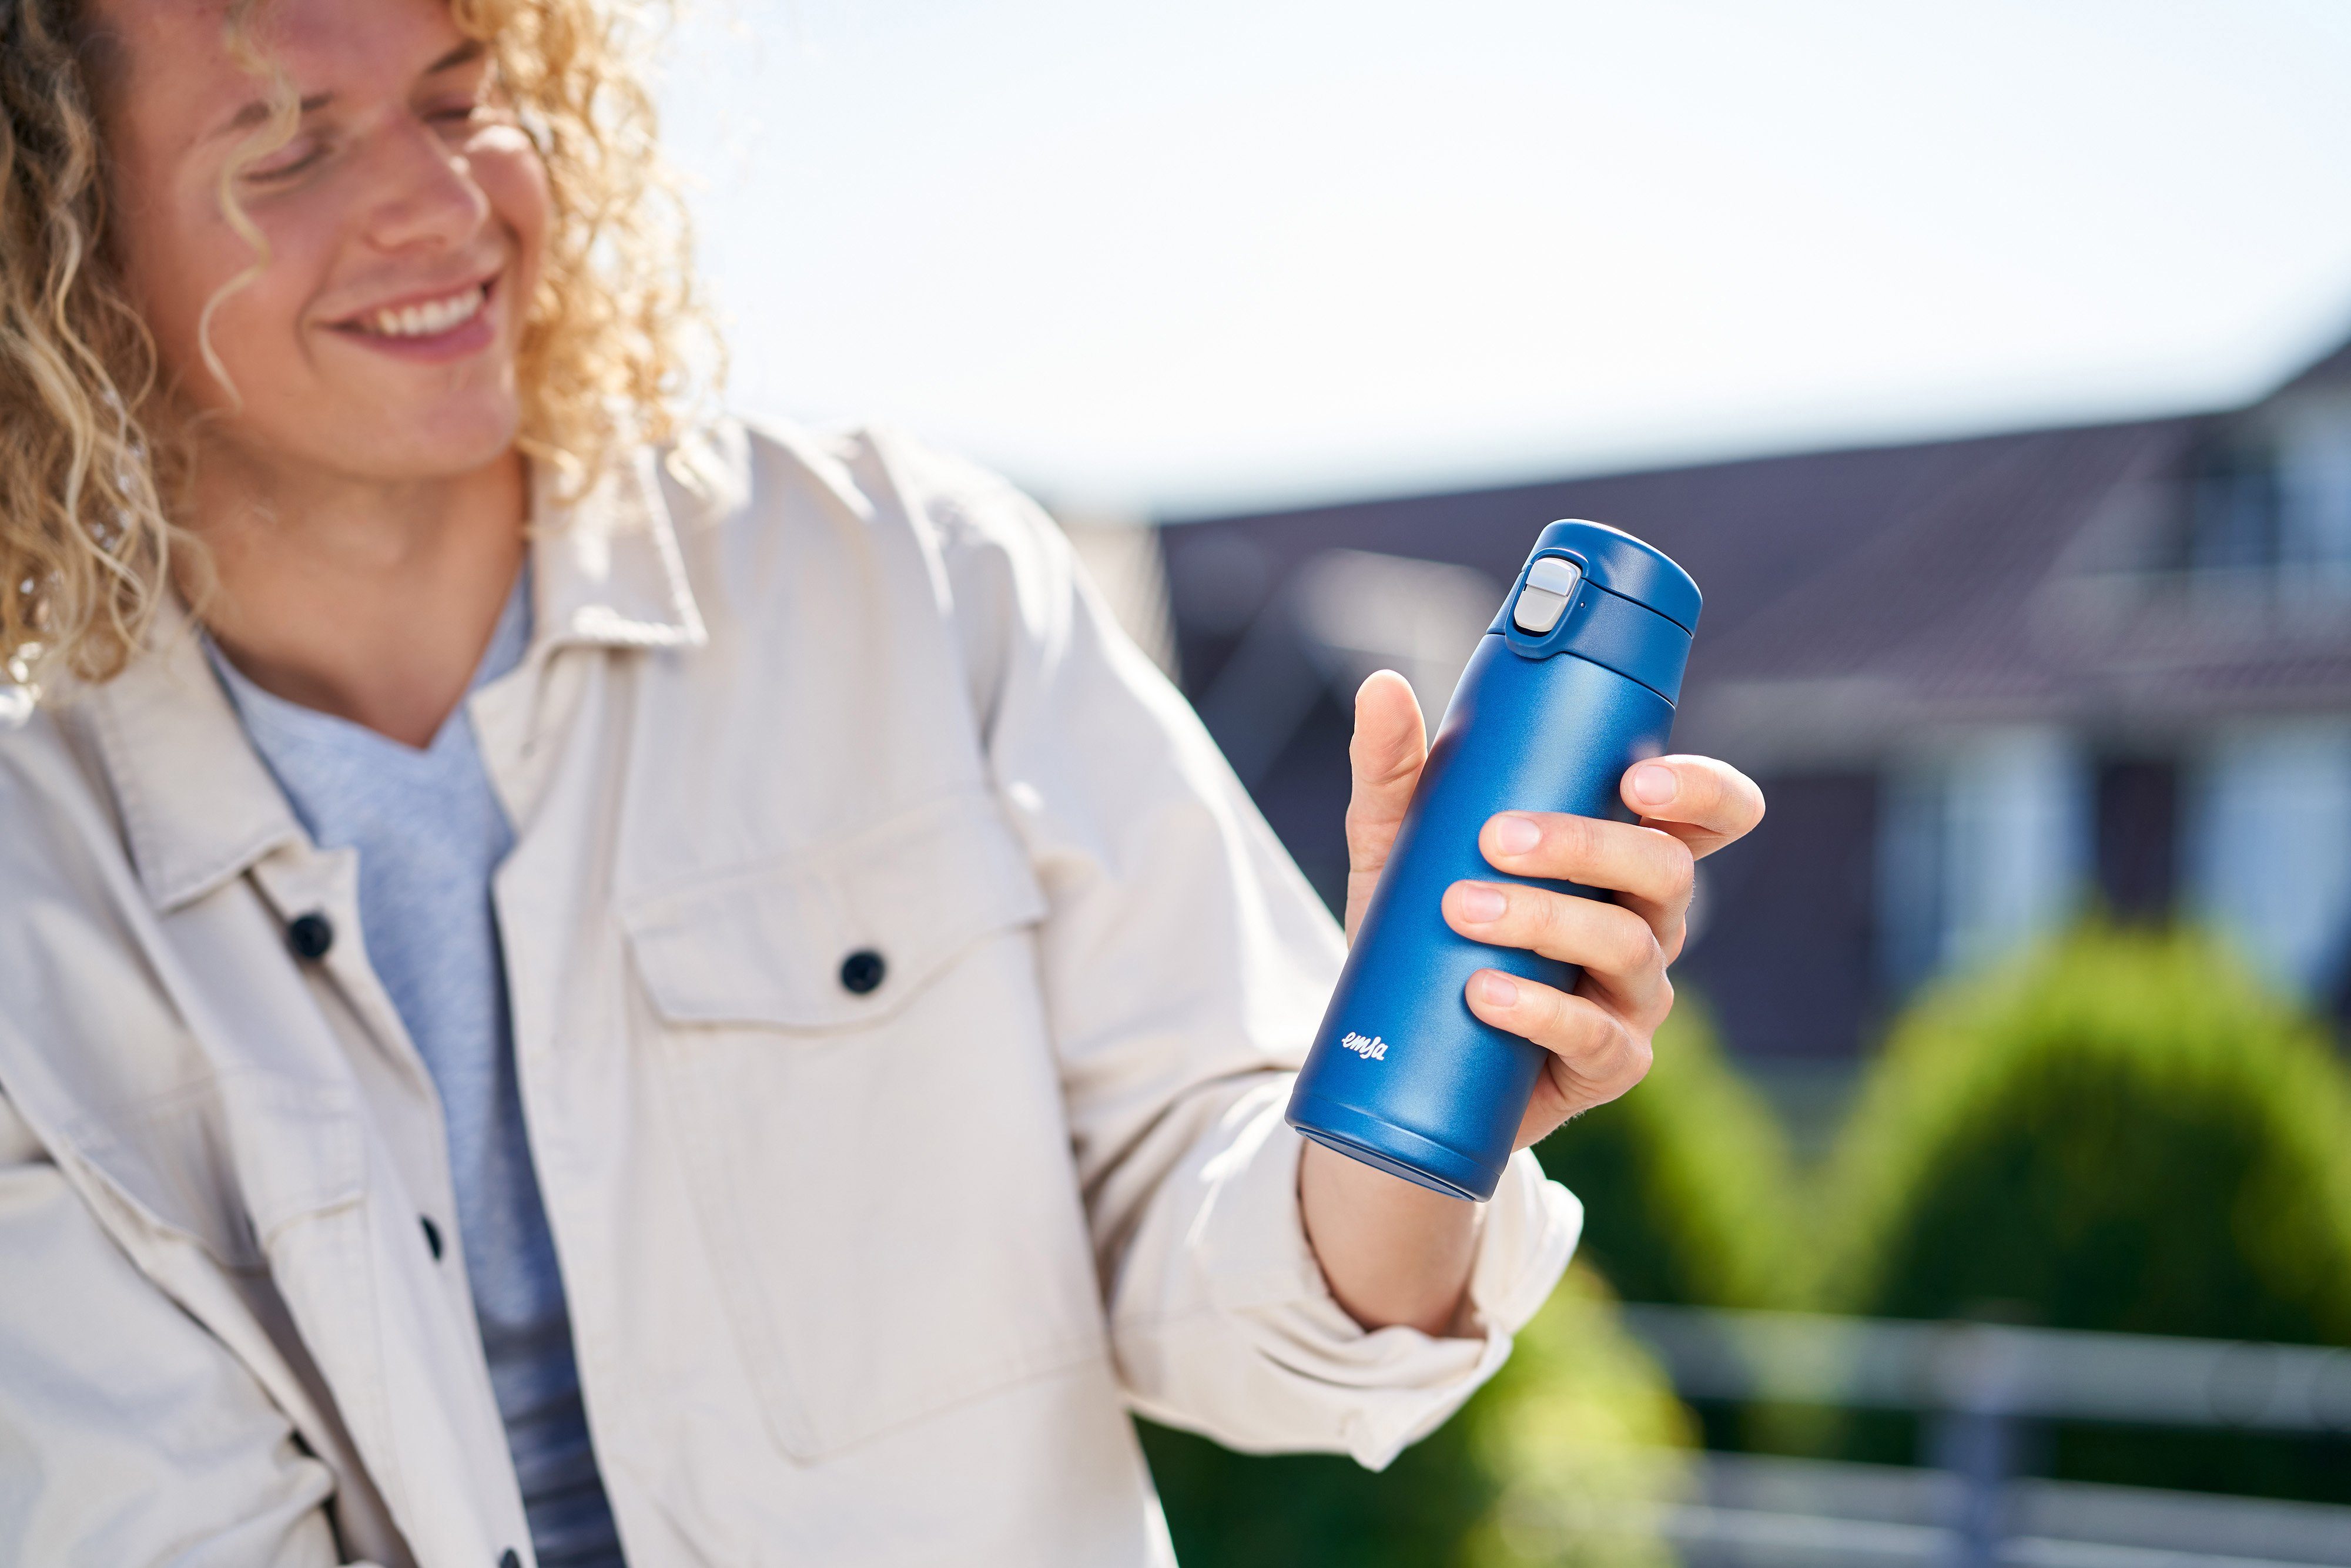 Emsa Thermobecher Travel Mug Light, 0,4L, Edelstahl, 8h dicht, kalt Kunststoff, 100% Edelstahl, blau warm/16h